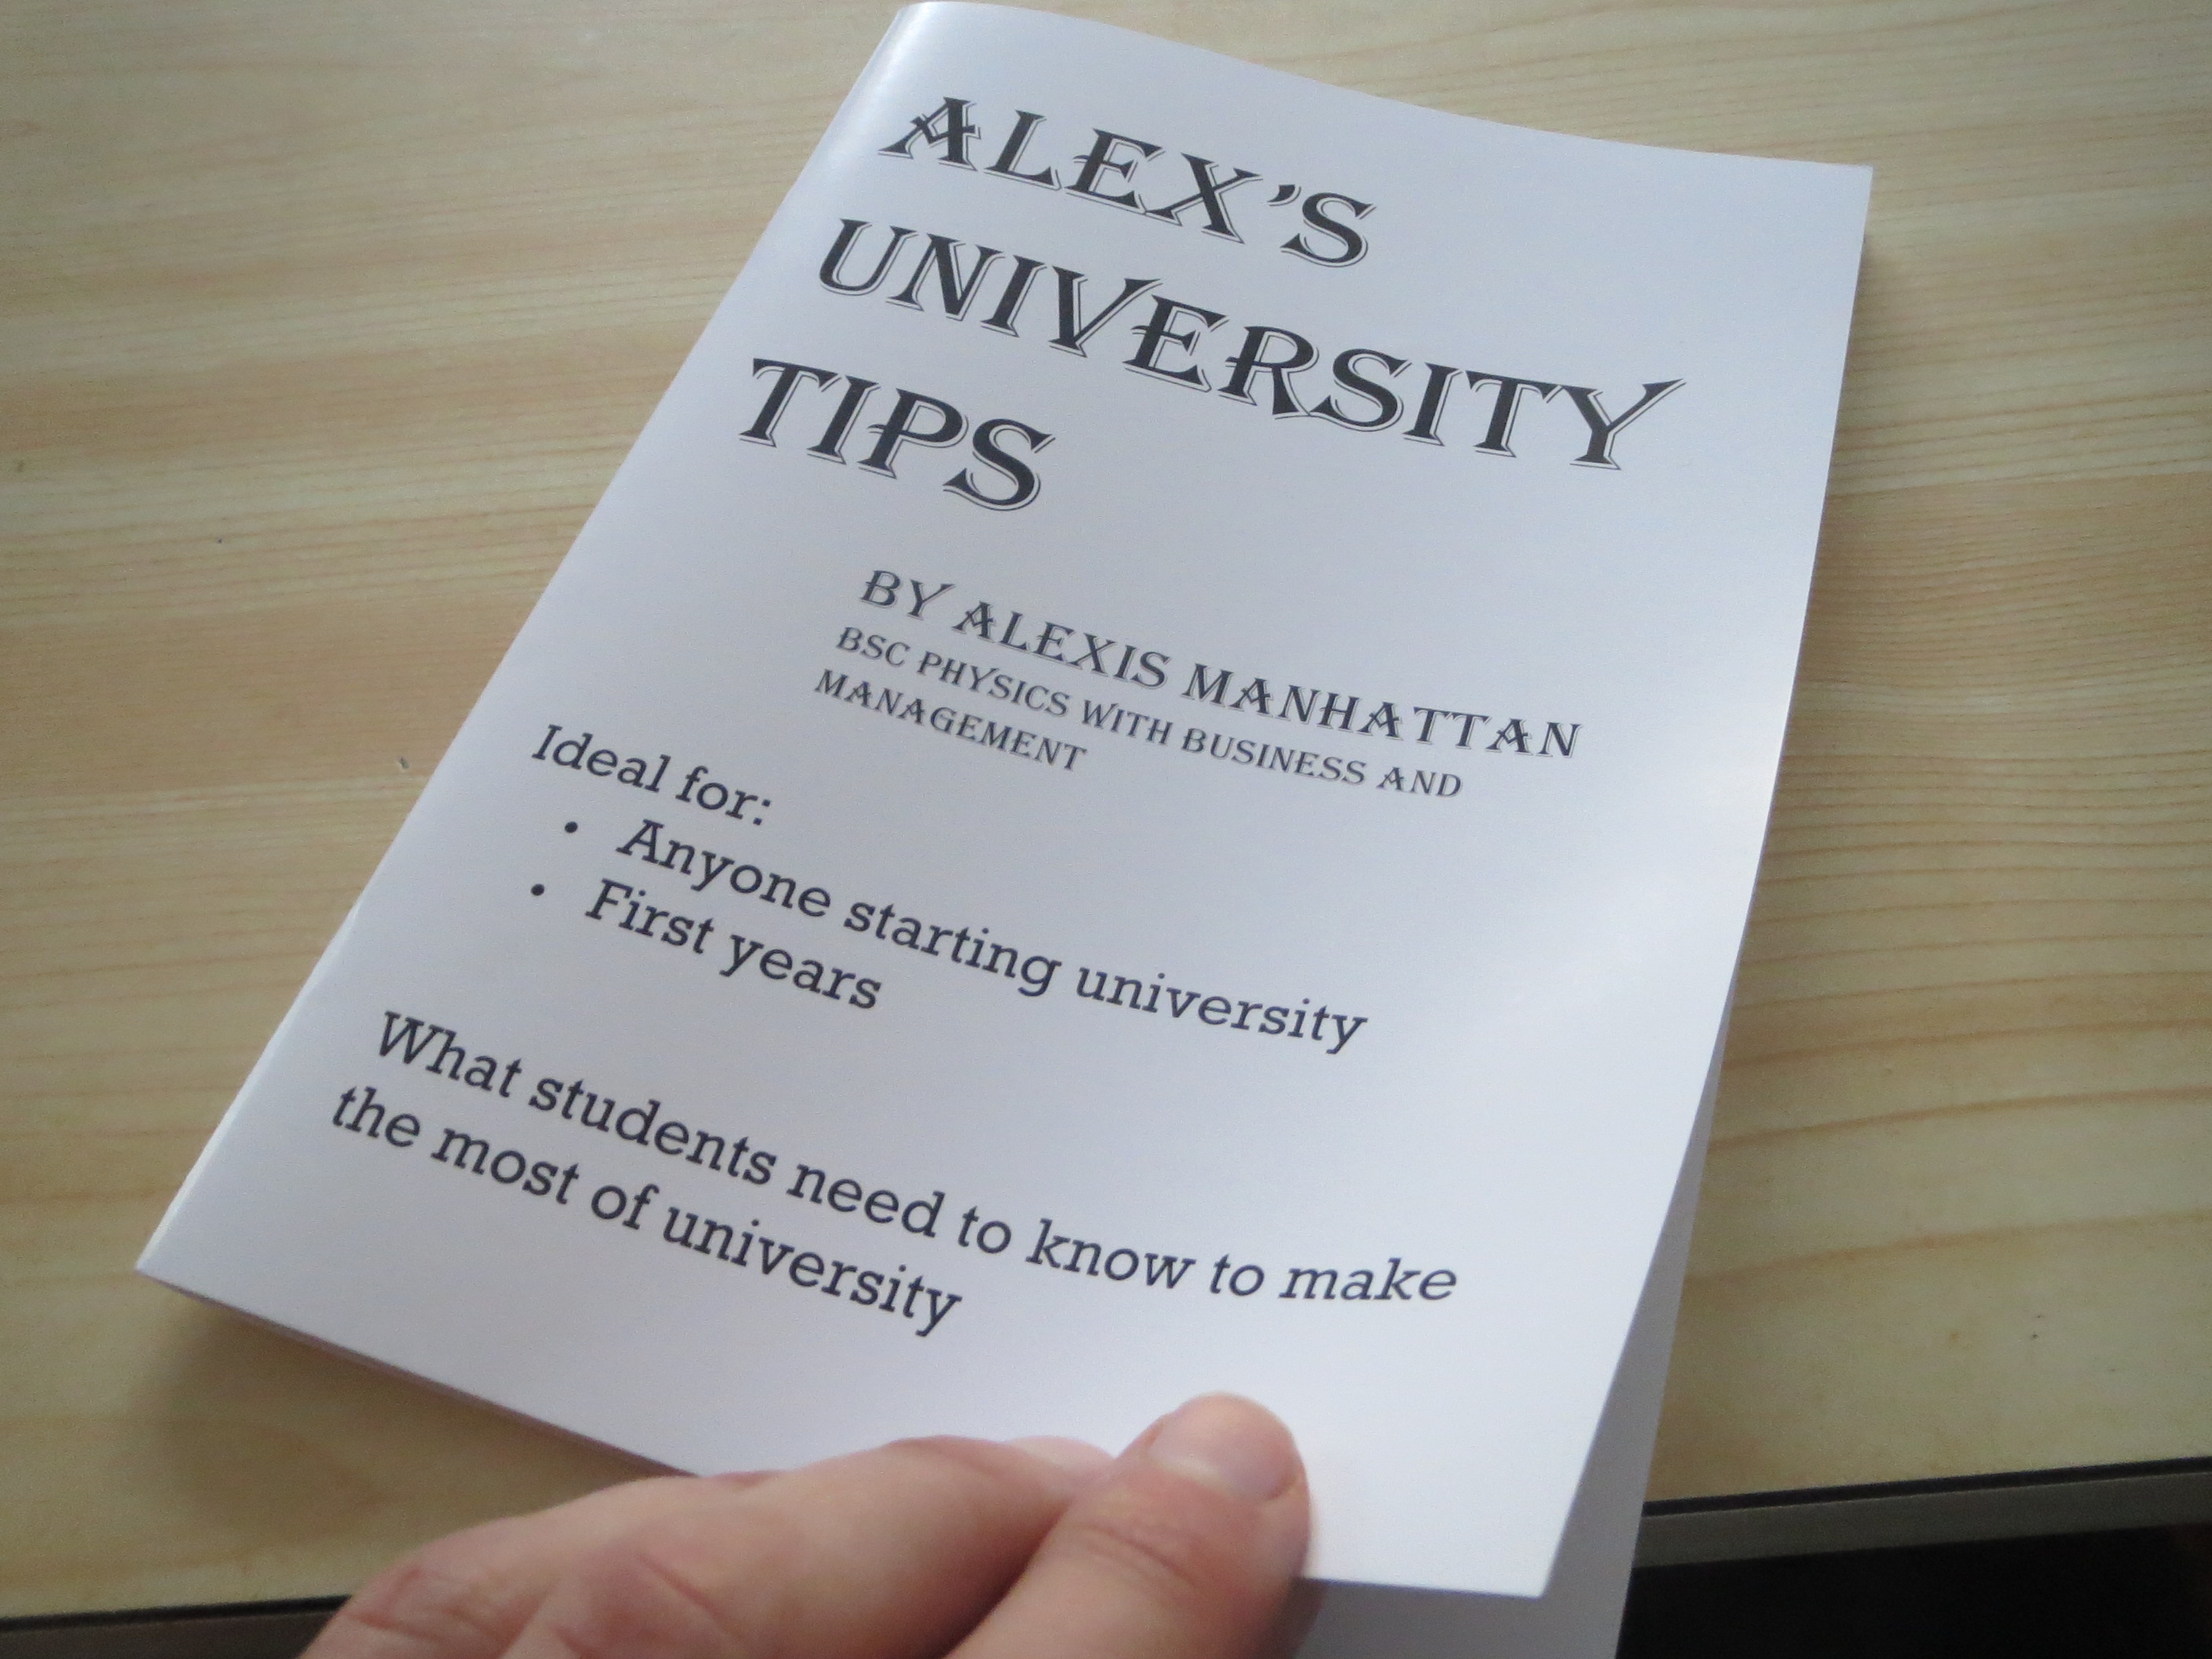 Alex's University Tips